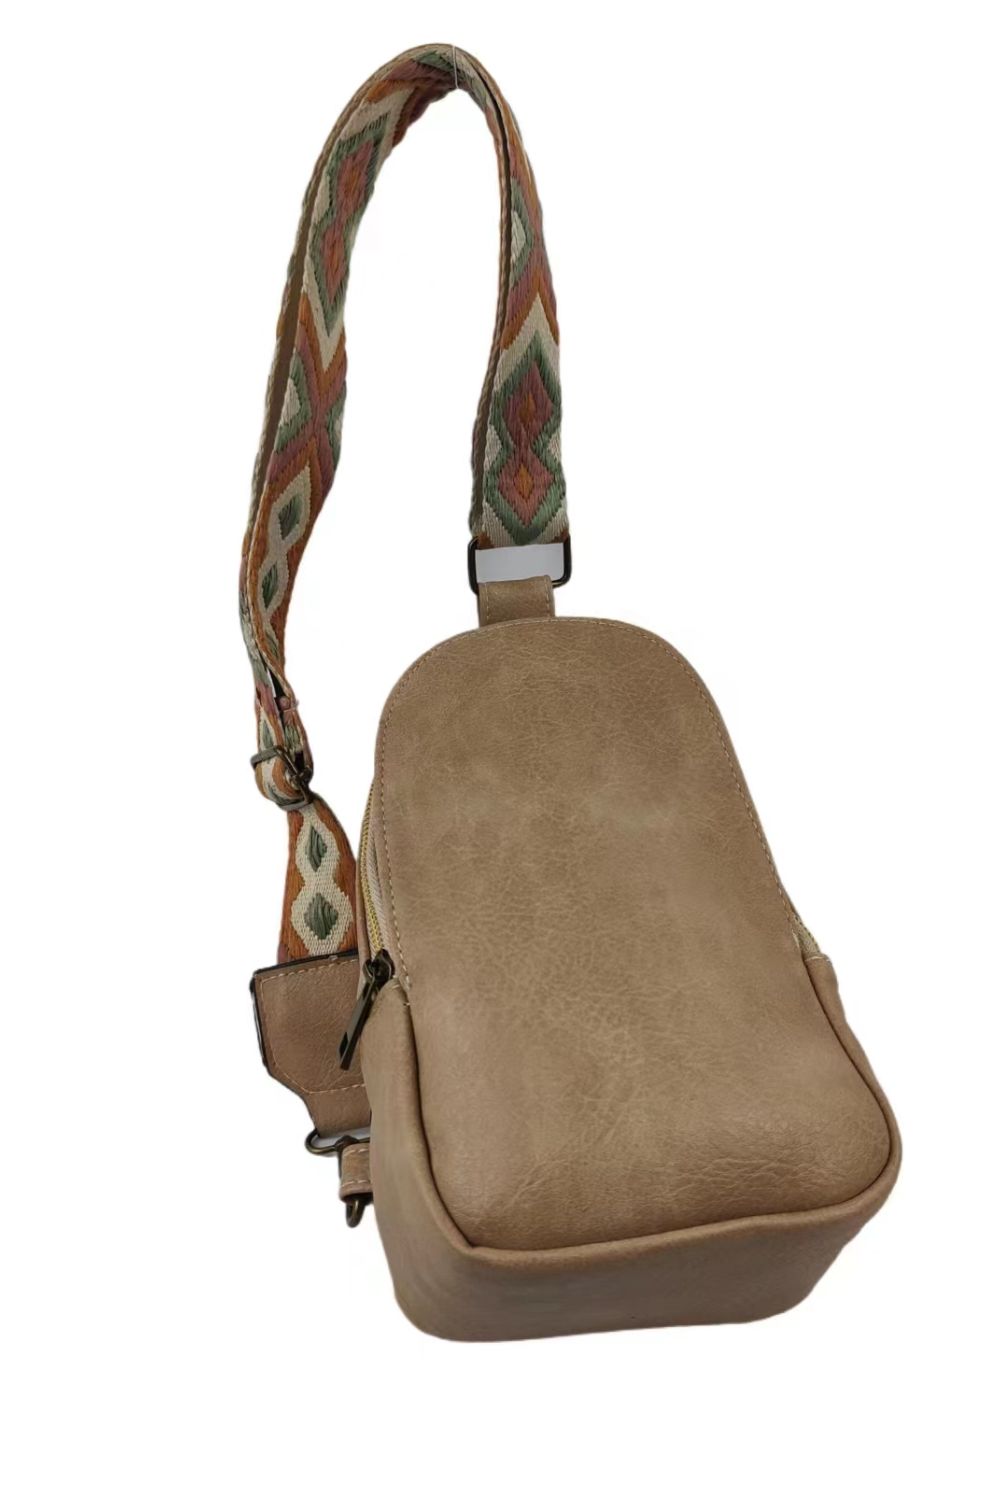 Dim Gray Random Pattern Adjustable Strap PU Leather Sling Bag Handbags